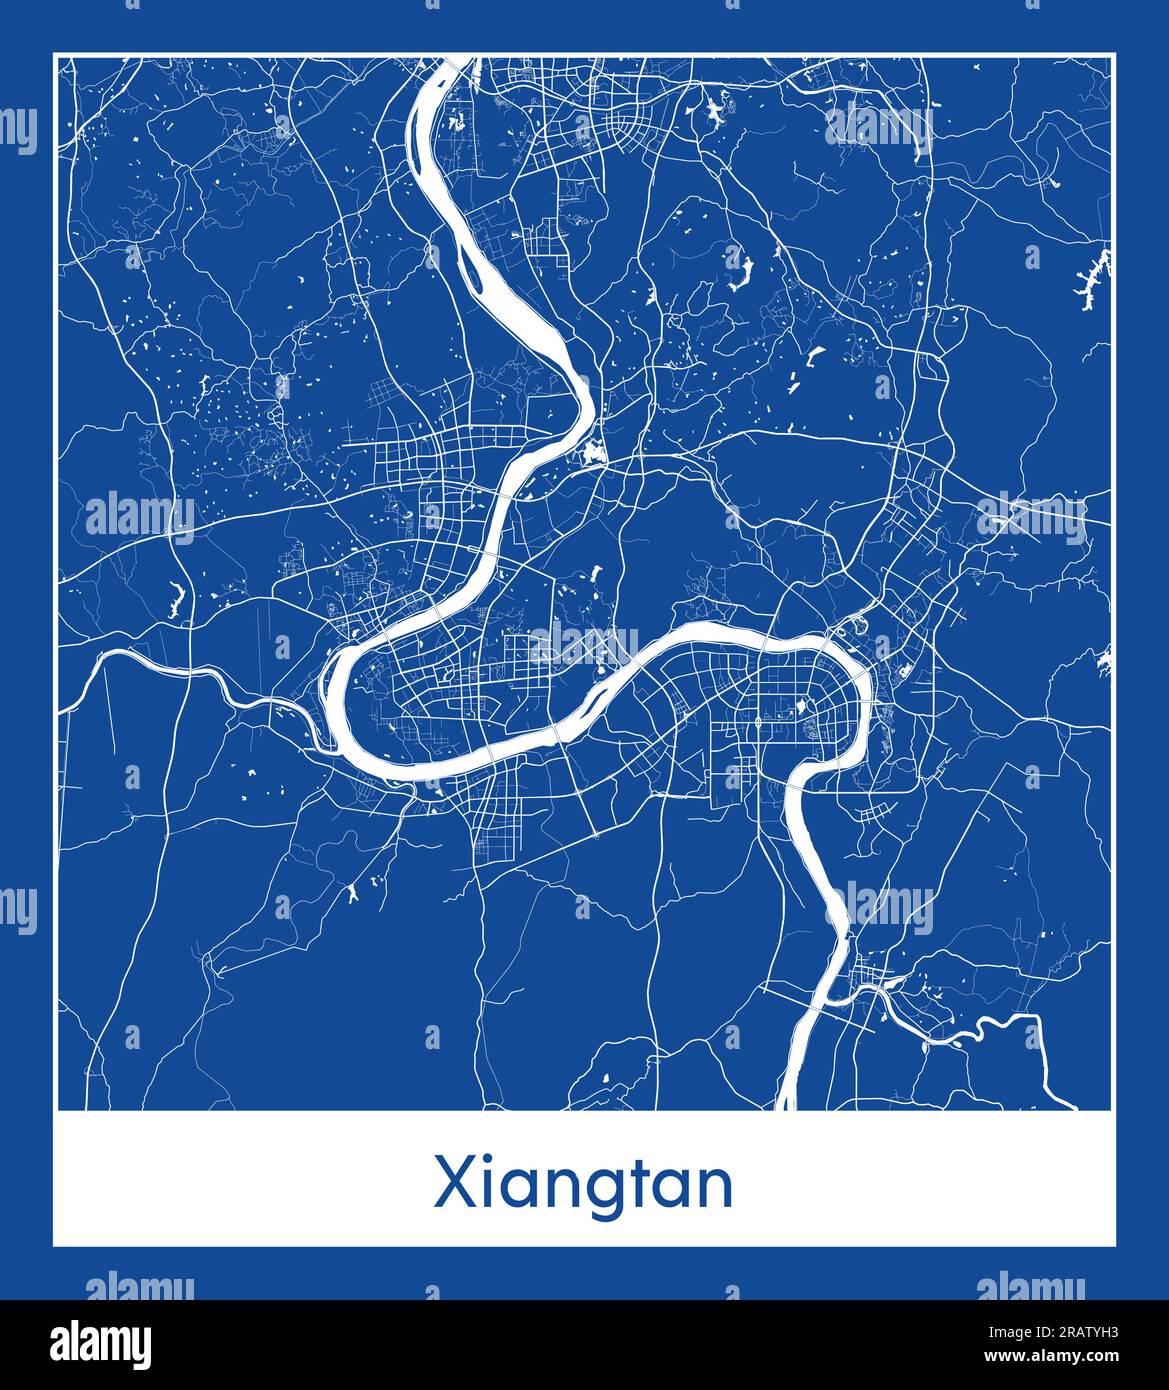 Xiangtan China Asia City map blue print vector illustration Stock Vector